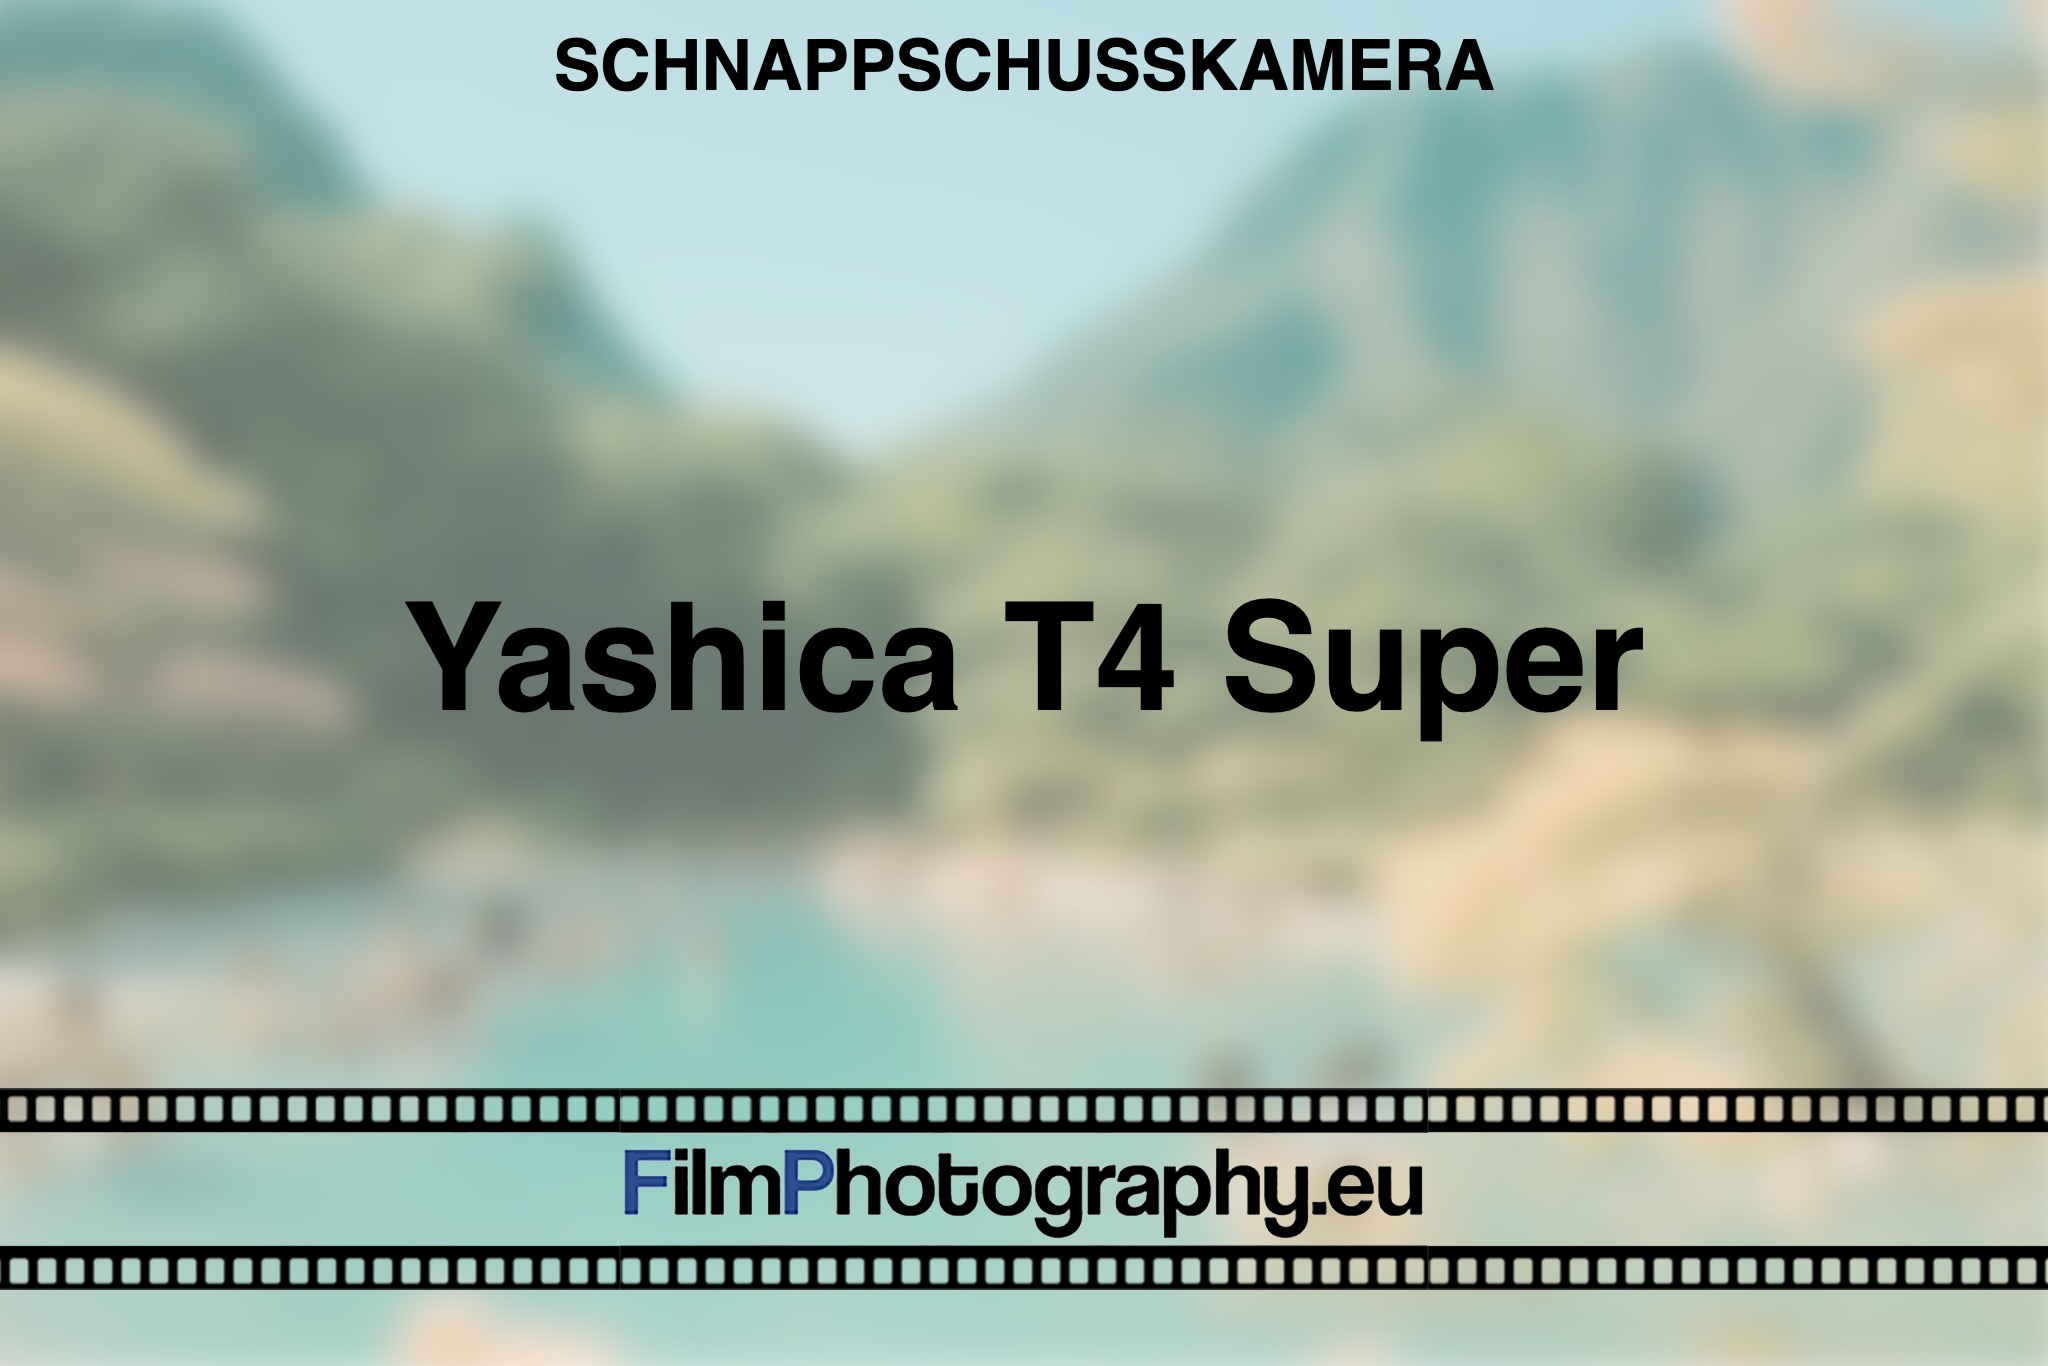 yashica-t4-super-schnappschusskamera-bnv